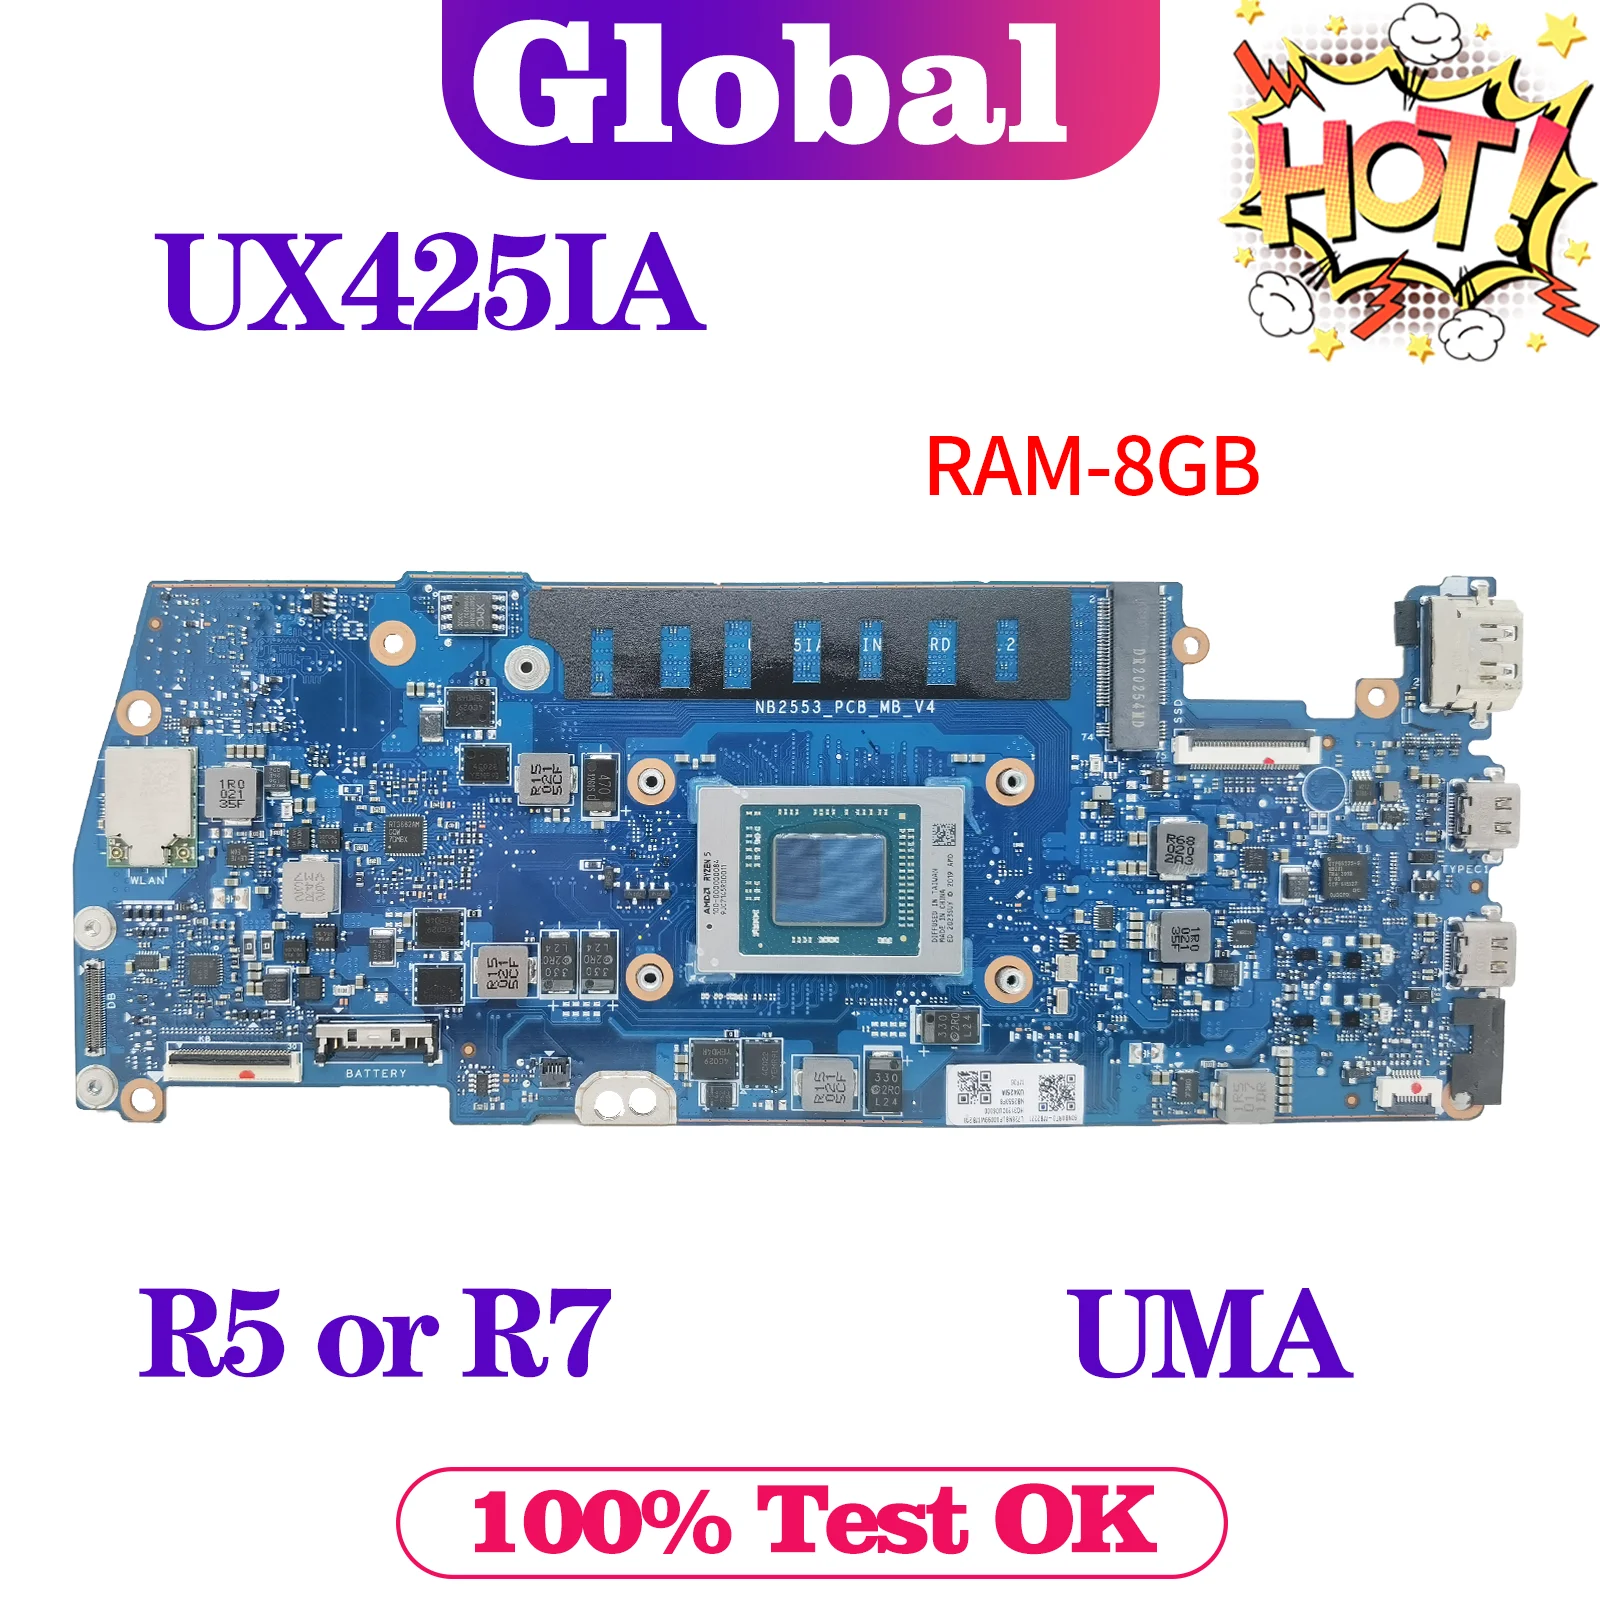 

KEFU UX425I Mainboard For ASUS ZenBook UX425 UX425IA UM425IA Laptop Motherboard R5 R7 4th Gen 8G-RAM MAIN BOARD